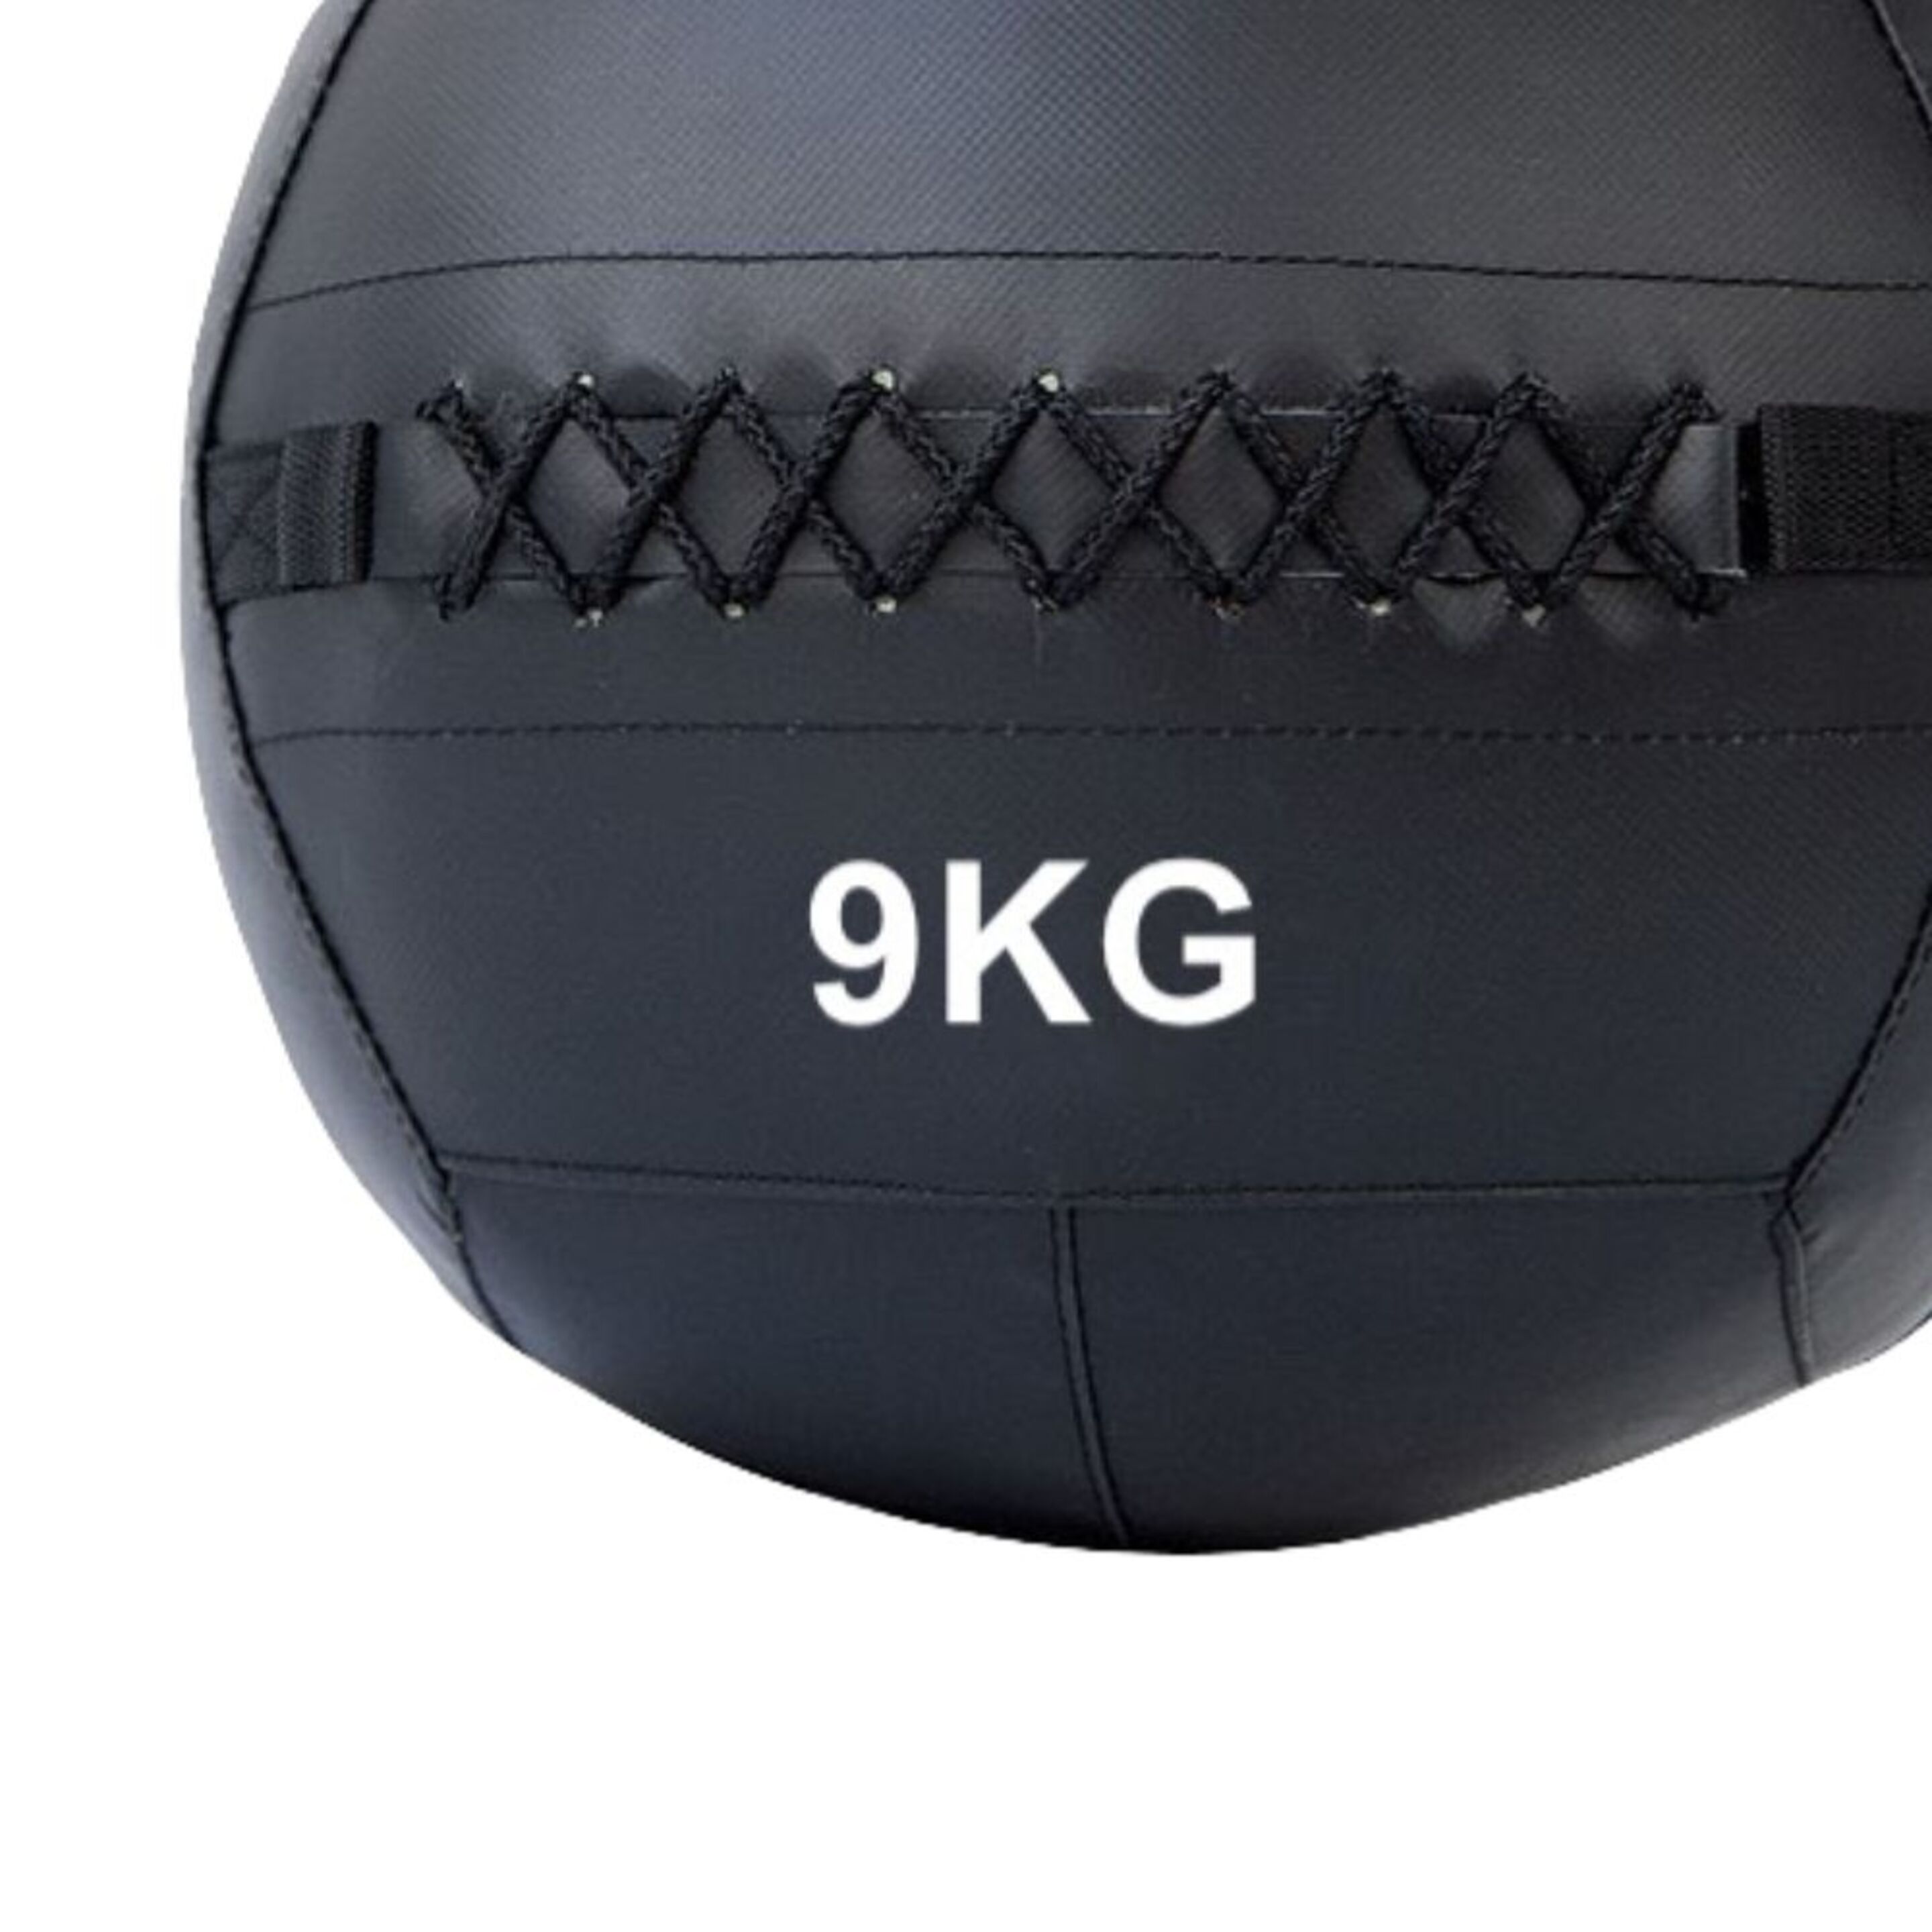 Wall Ball Doble Costura 9kg - Negro - Wall Ball Doble Costura 9kg  MKP